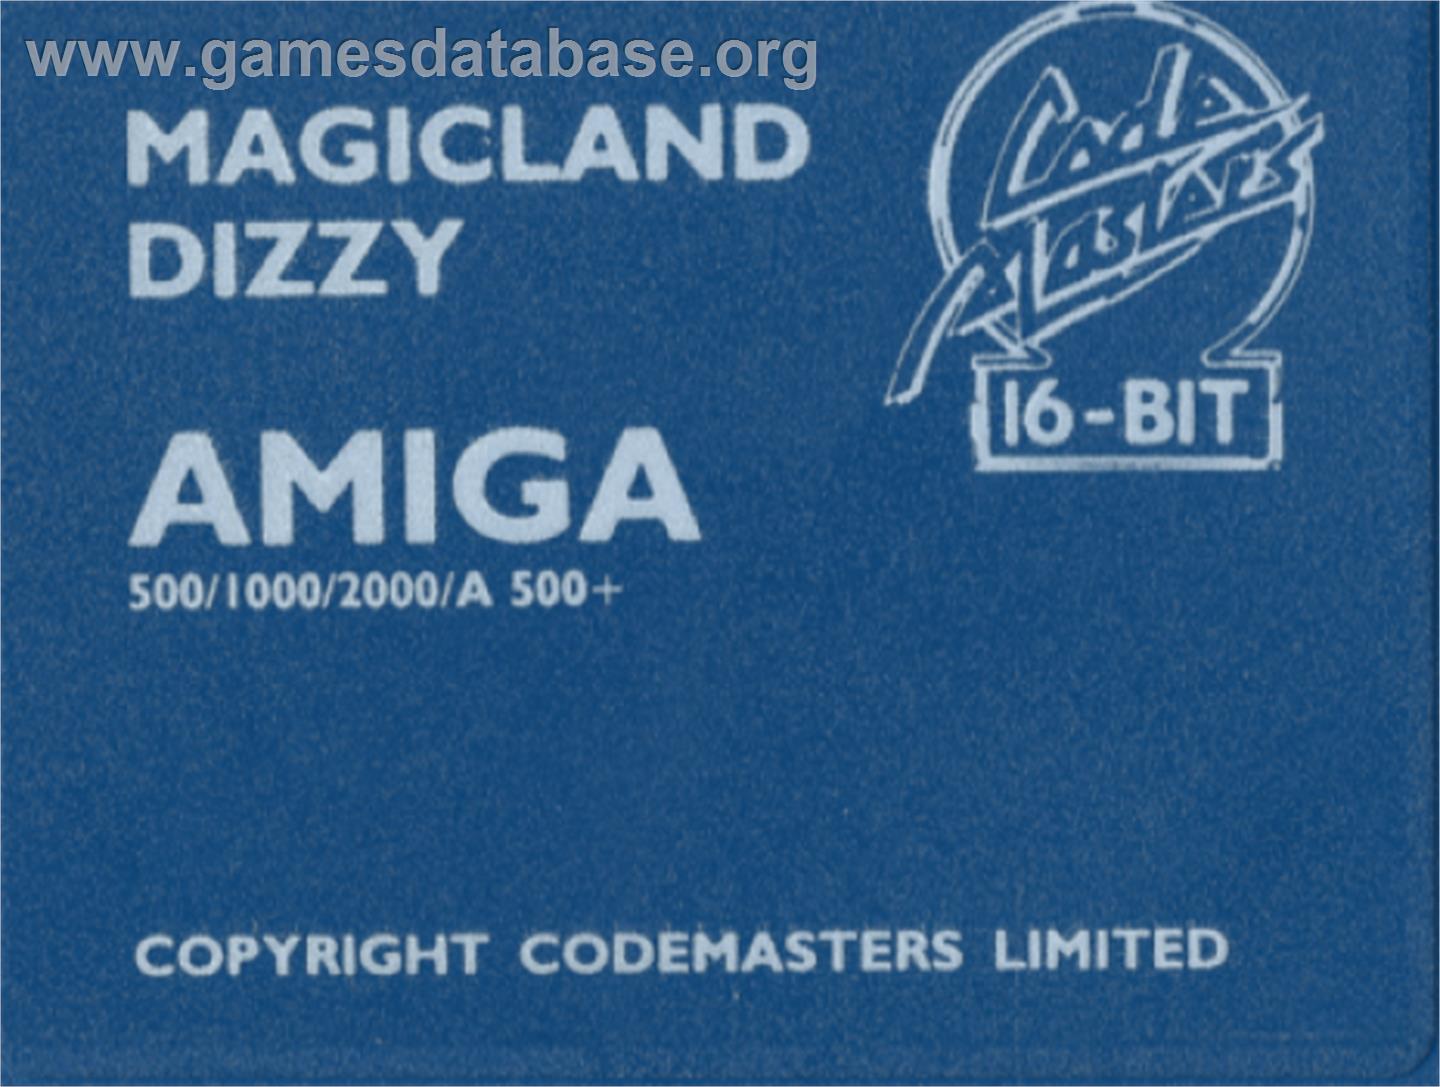 Magicland Dizzy - Commodore Amiga - Artwork - Cartridge Top